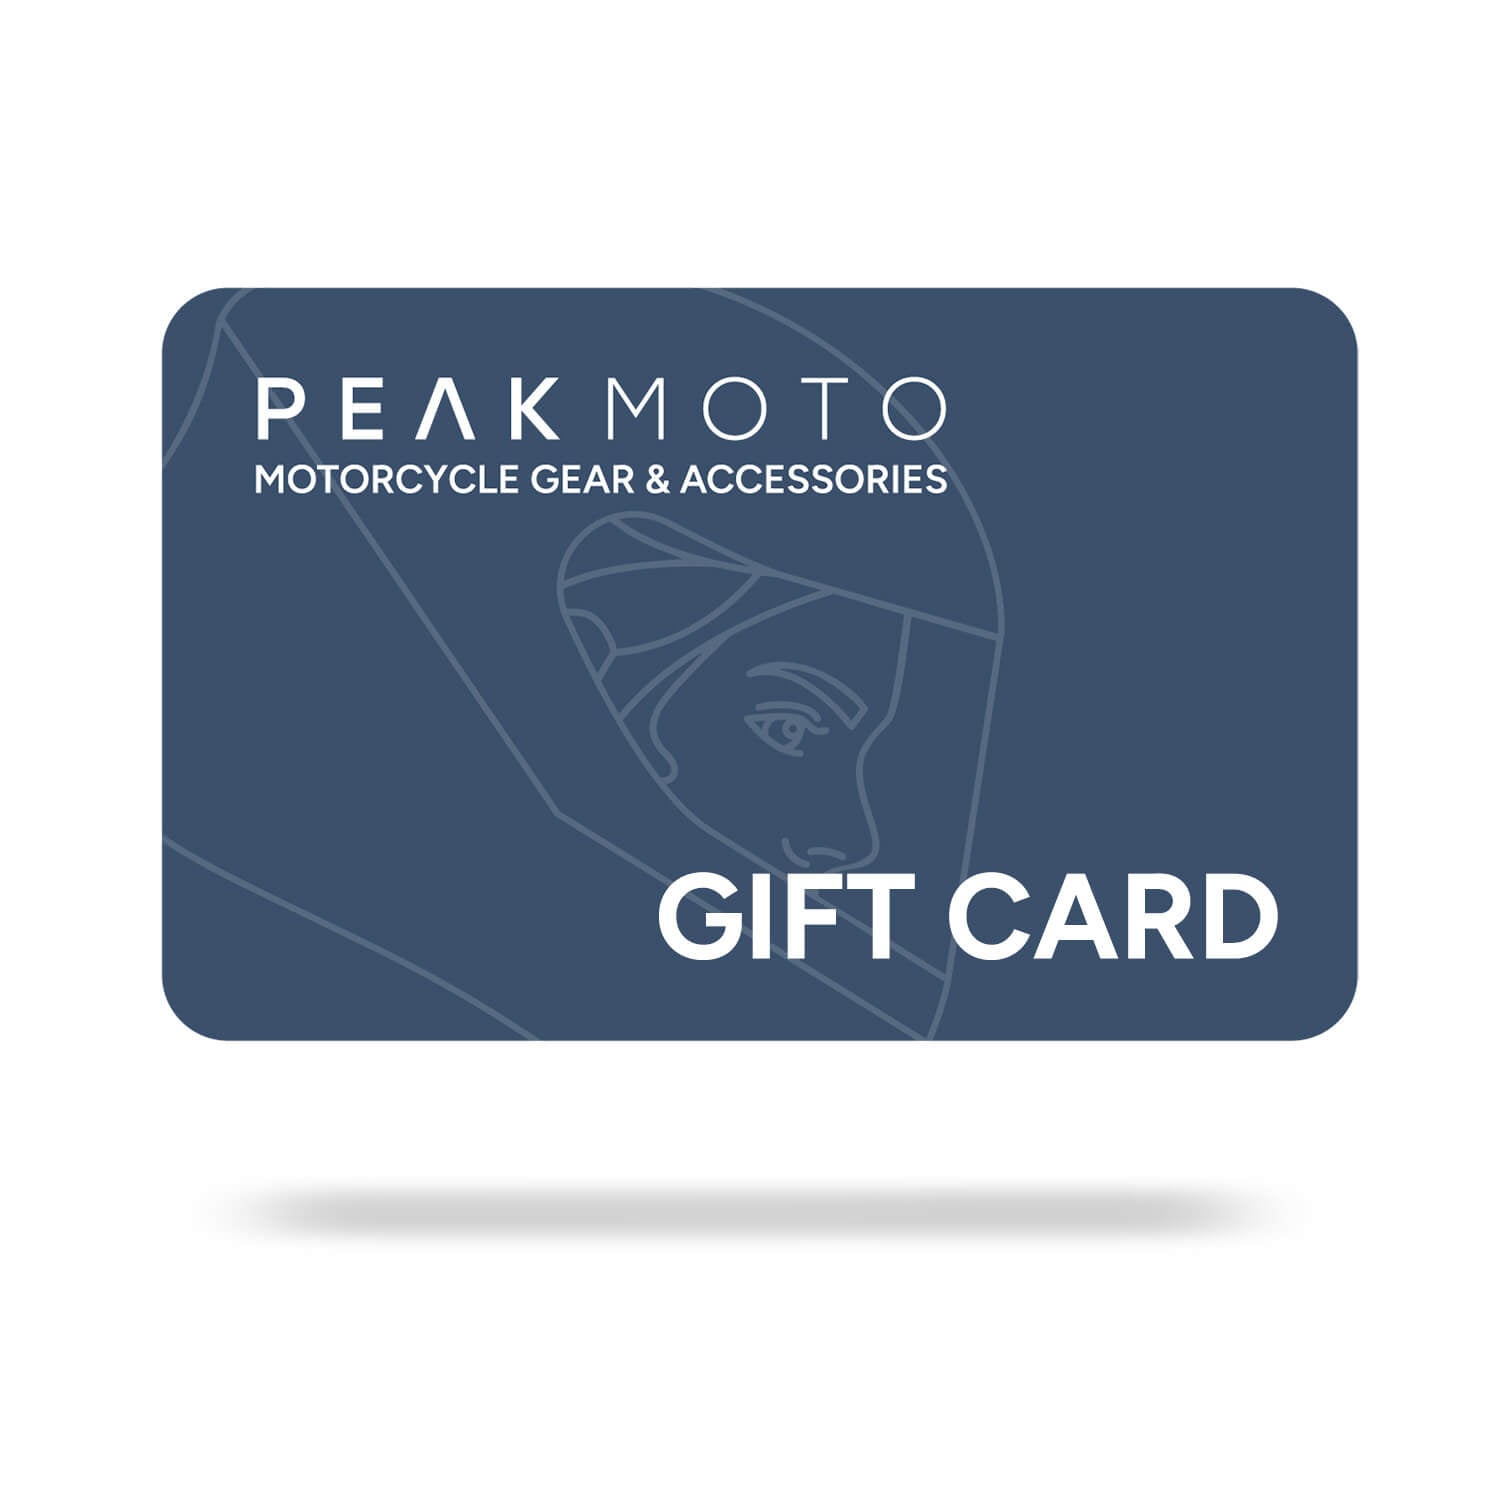 Peak Moto Gift Card - $50.00 - Peak Moto